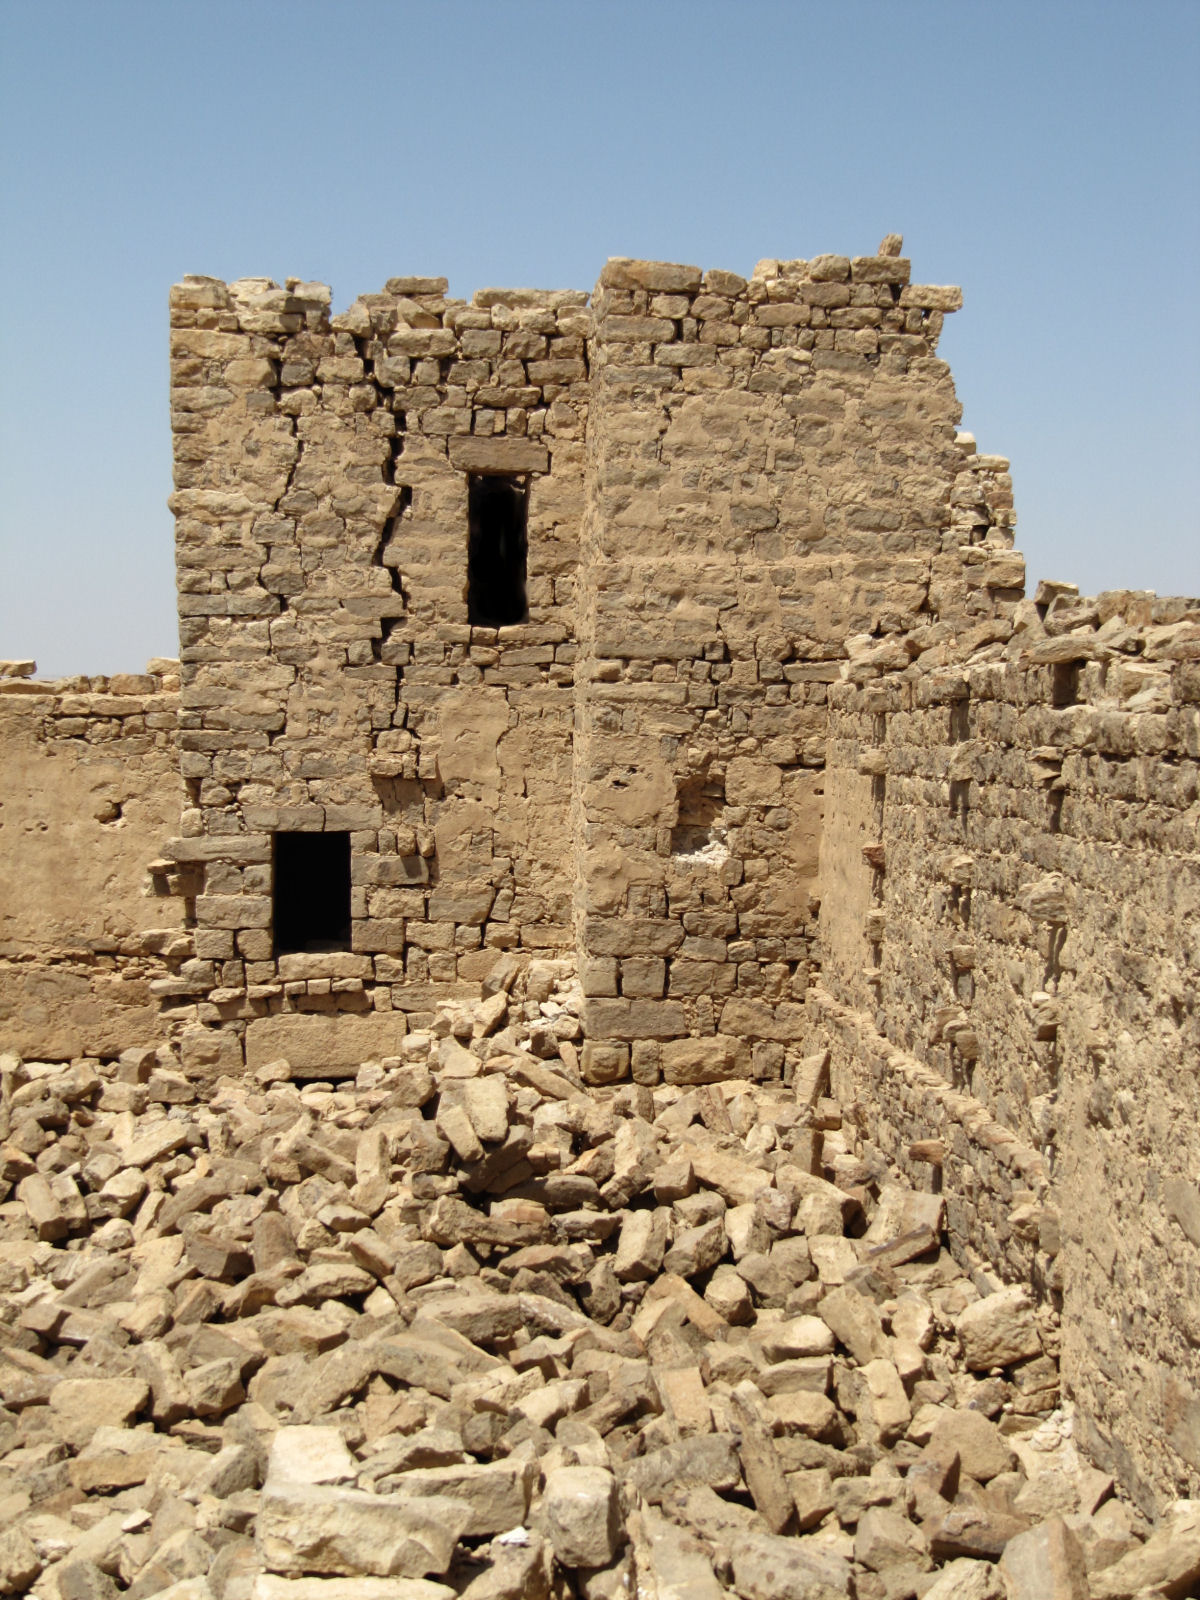 Limes Arabicus, a cadeia de fortificaes que protegia o territrio romano das tribos do deserto